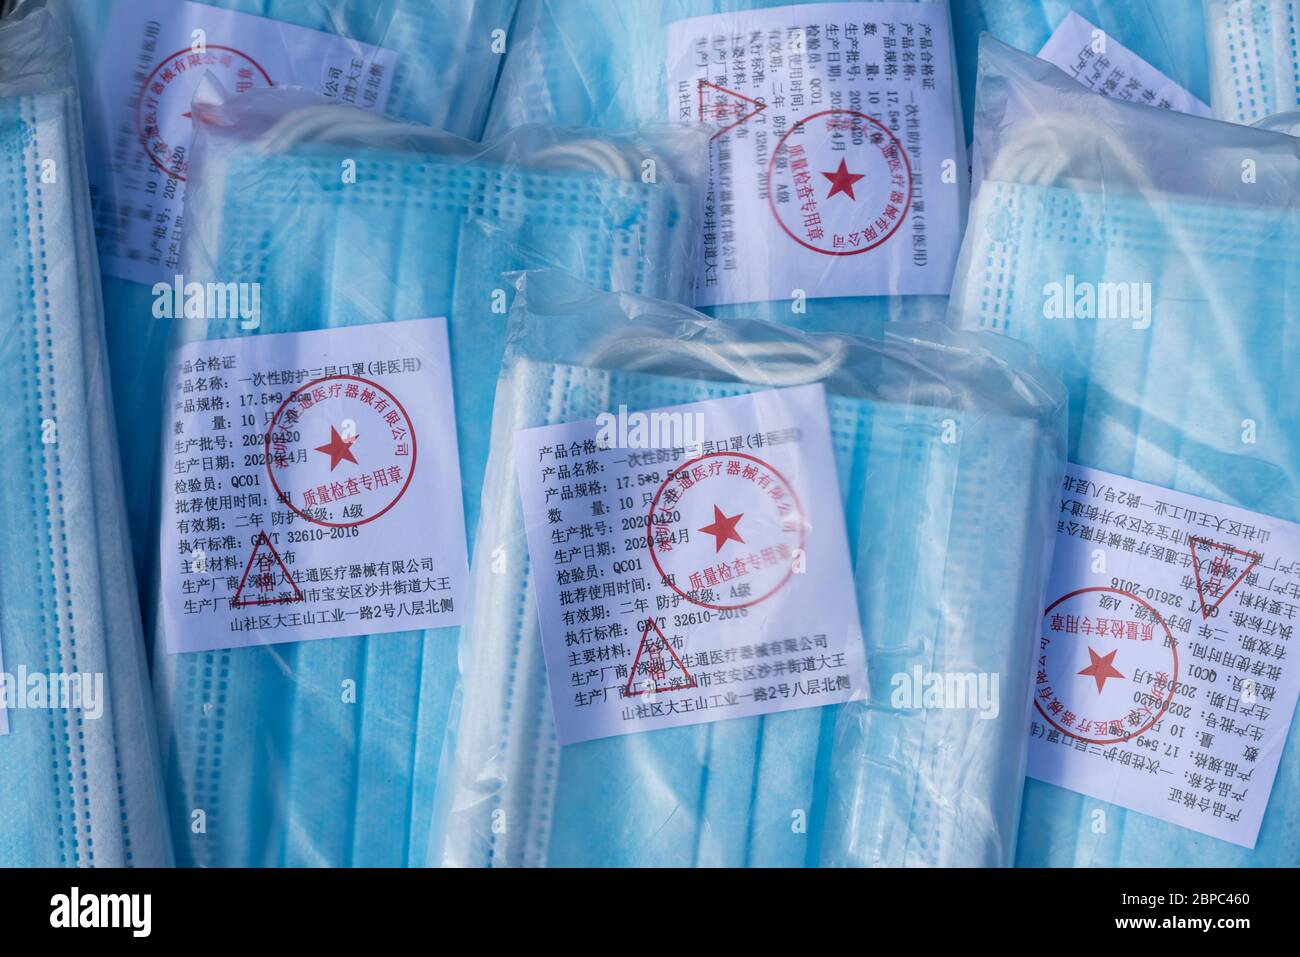 Packs of face masks from China during the coronavirus (Covid-19) pandemic, May 2020 Stock Photo